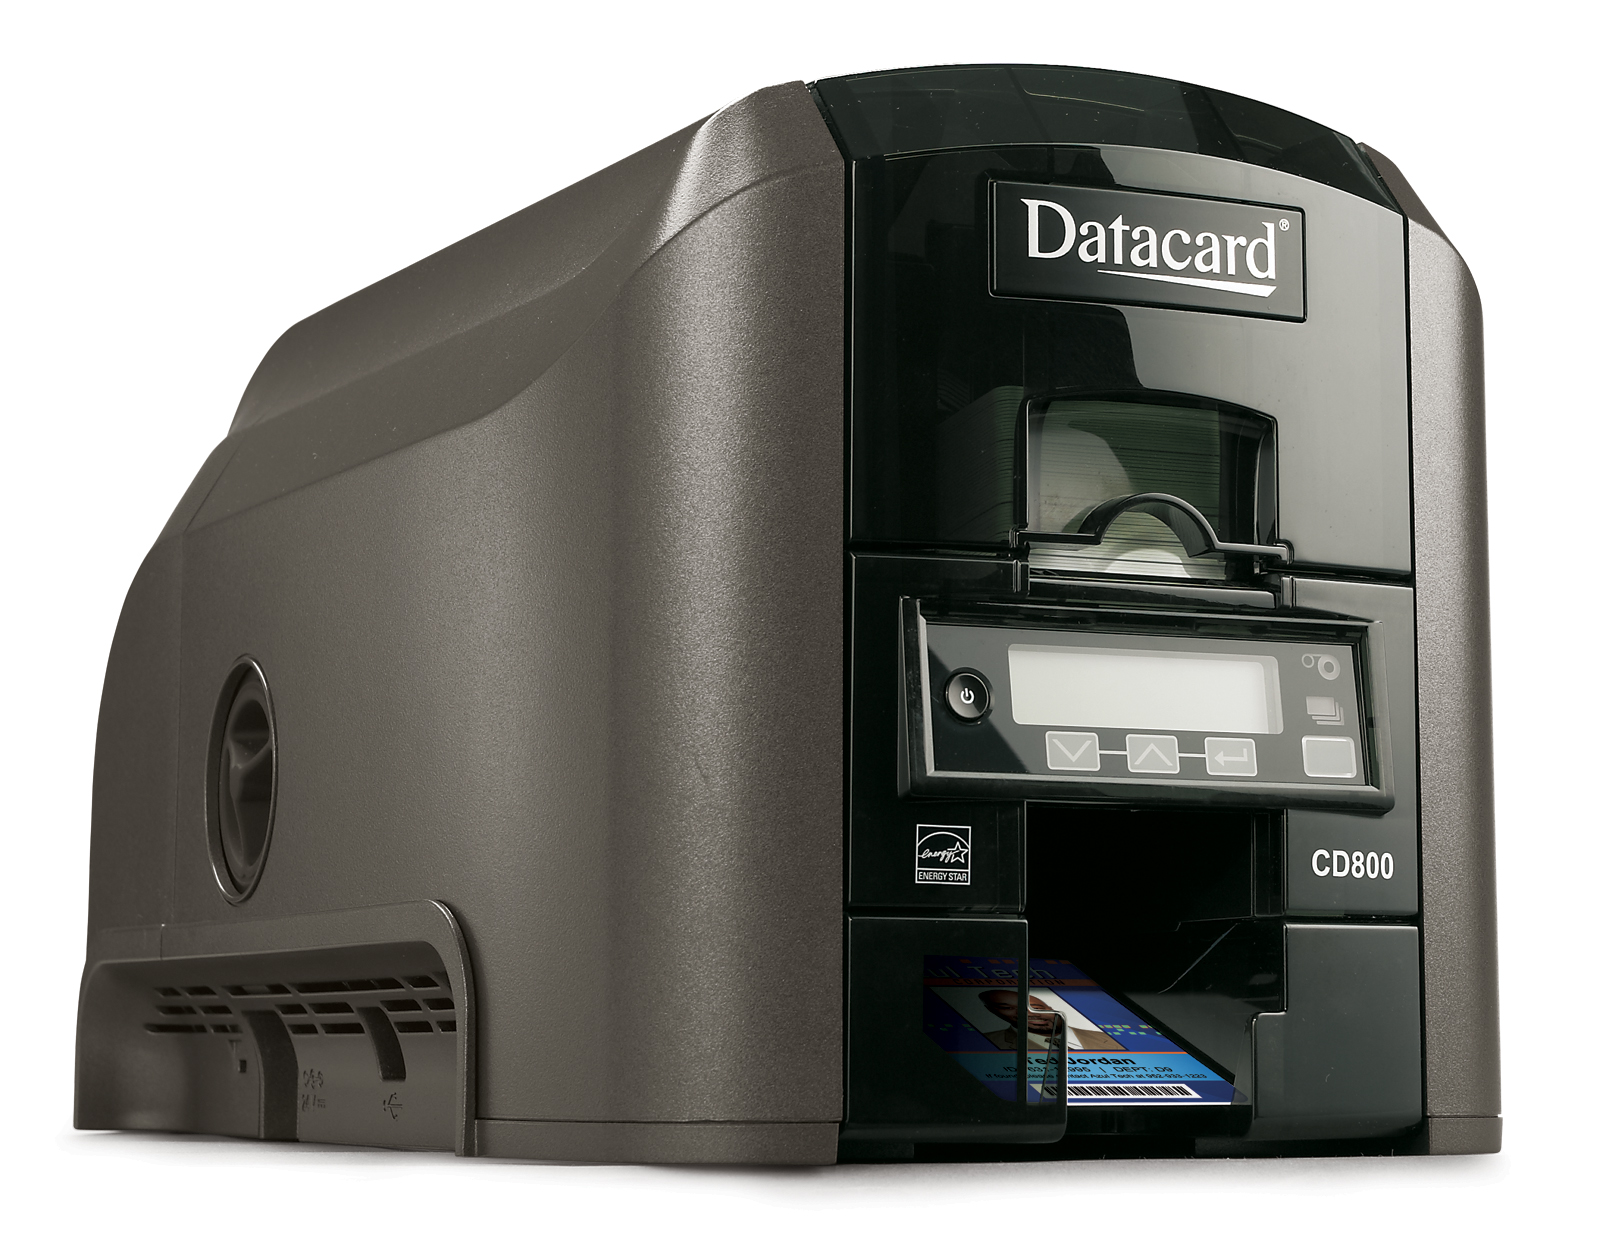 Entrust Datacard CD800 Direct-to-Card Printer